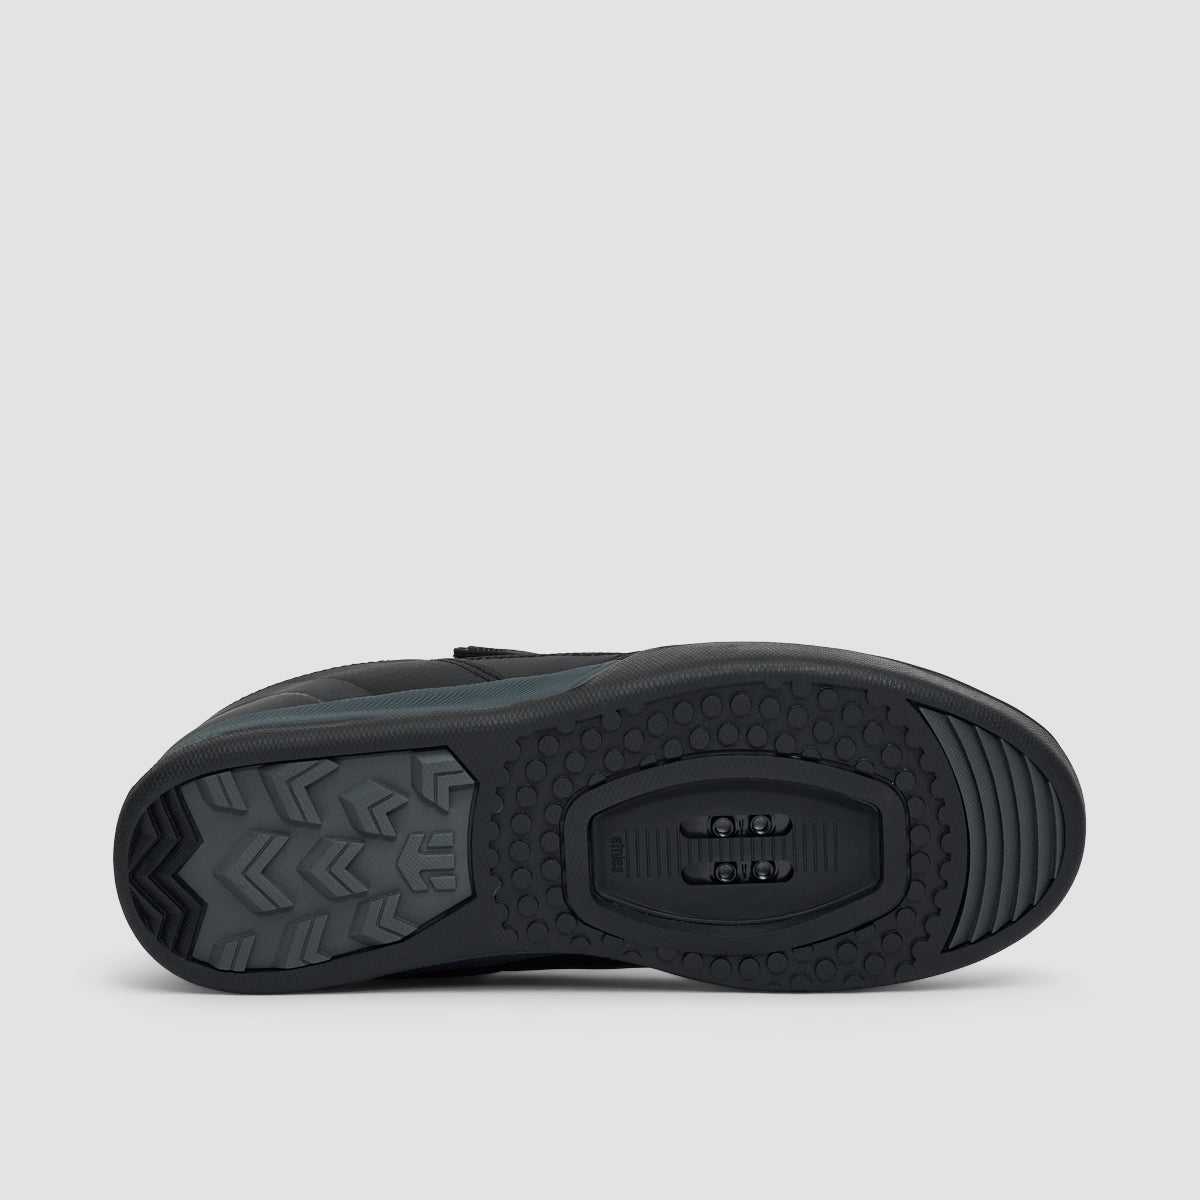 Etnies Camber CL Shoes - Black